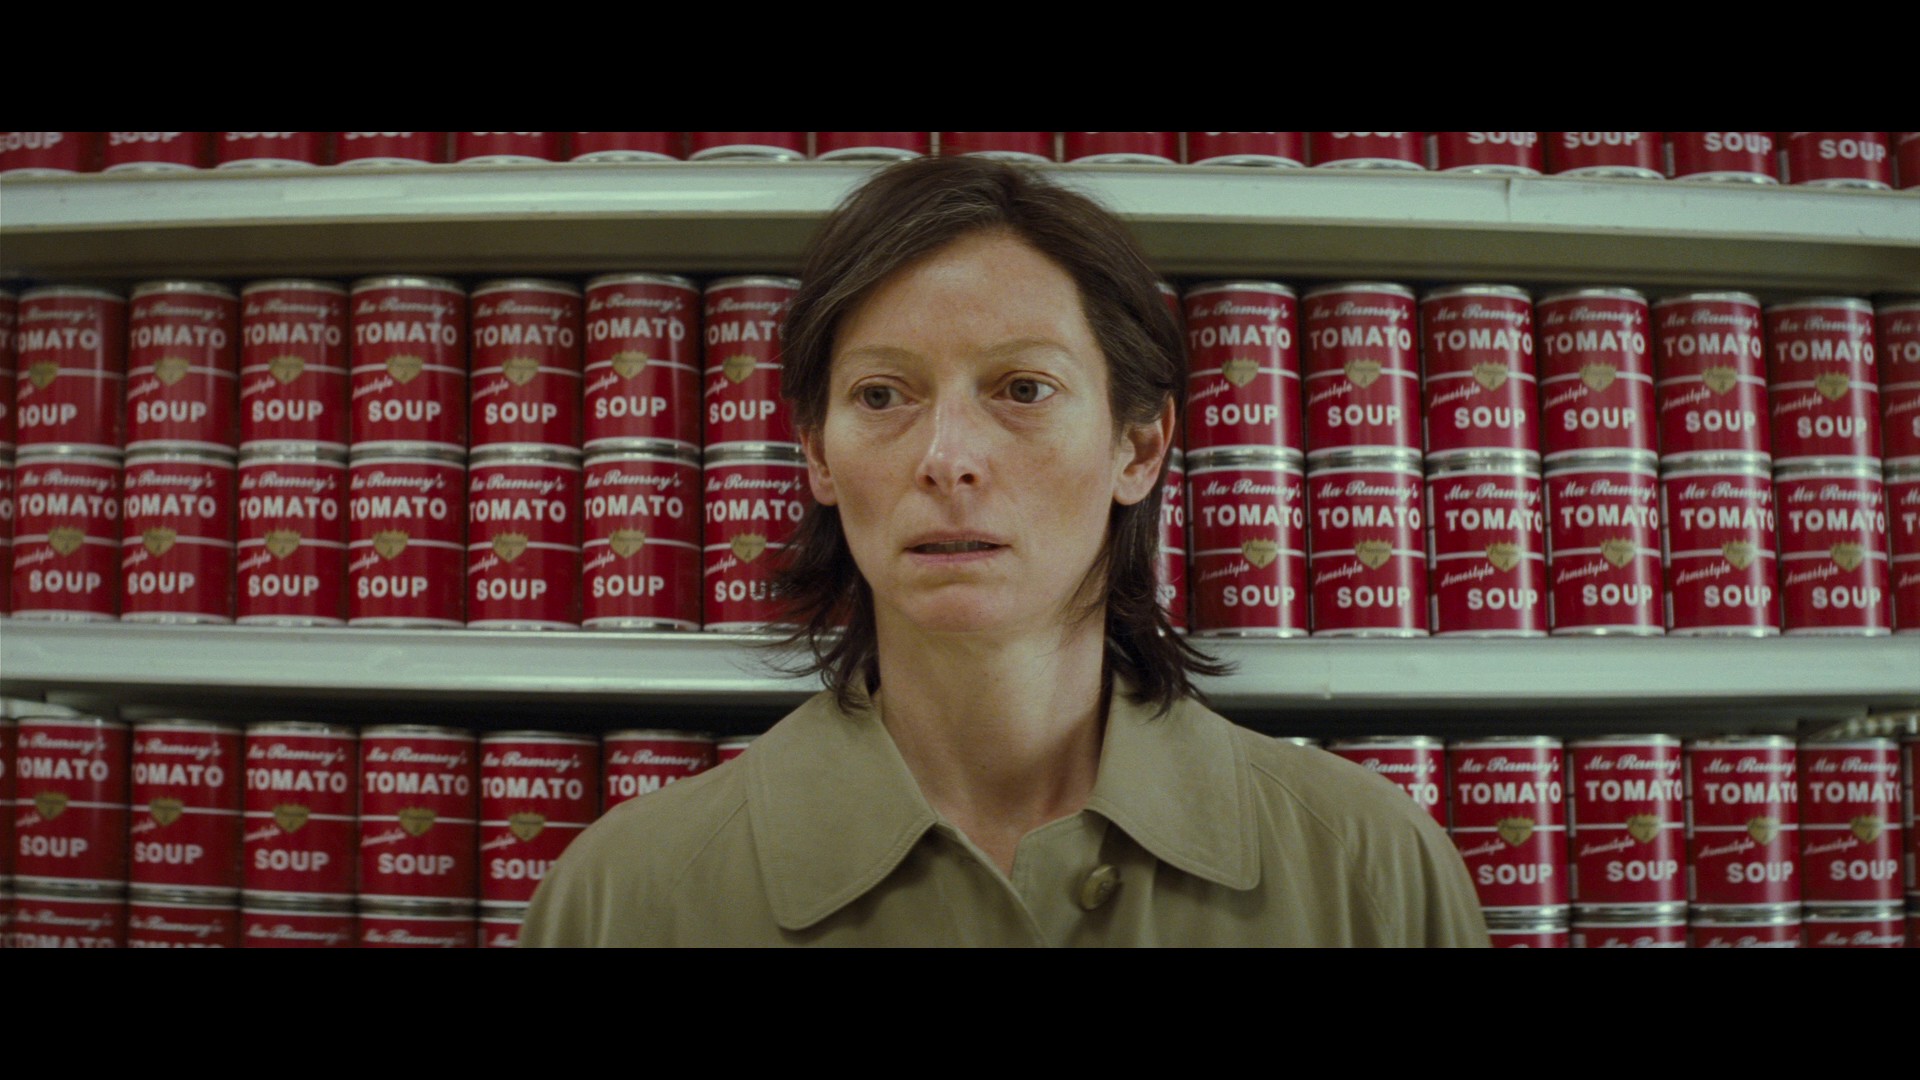 Eva (Tilda Swinton) sits in front of shelves full of canned tomato soup.